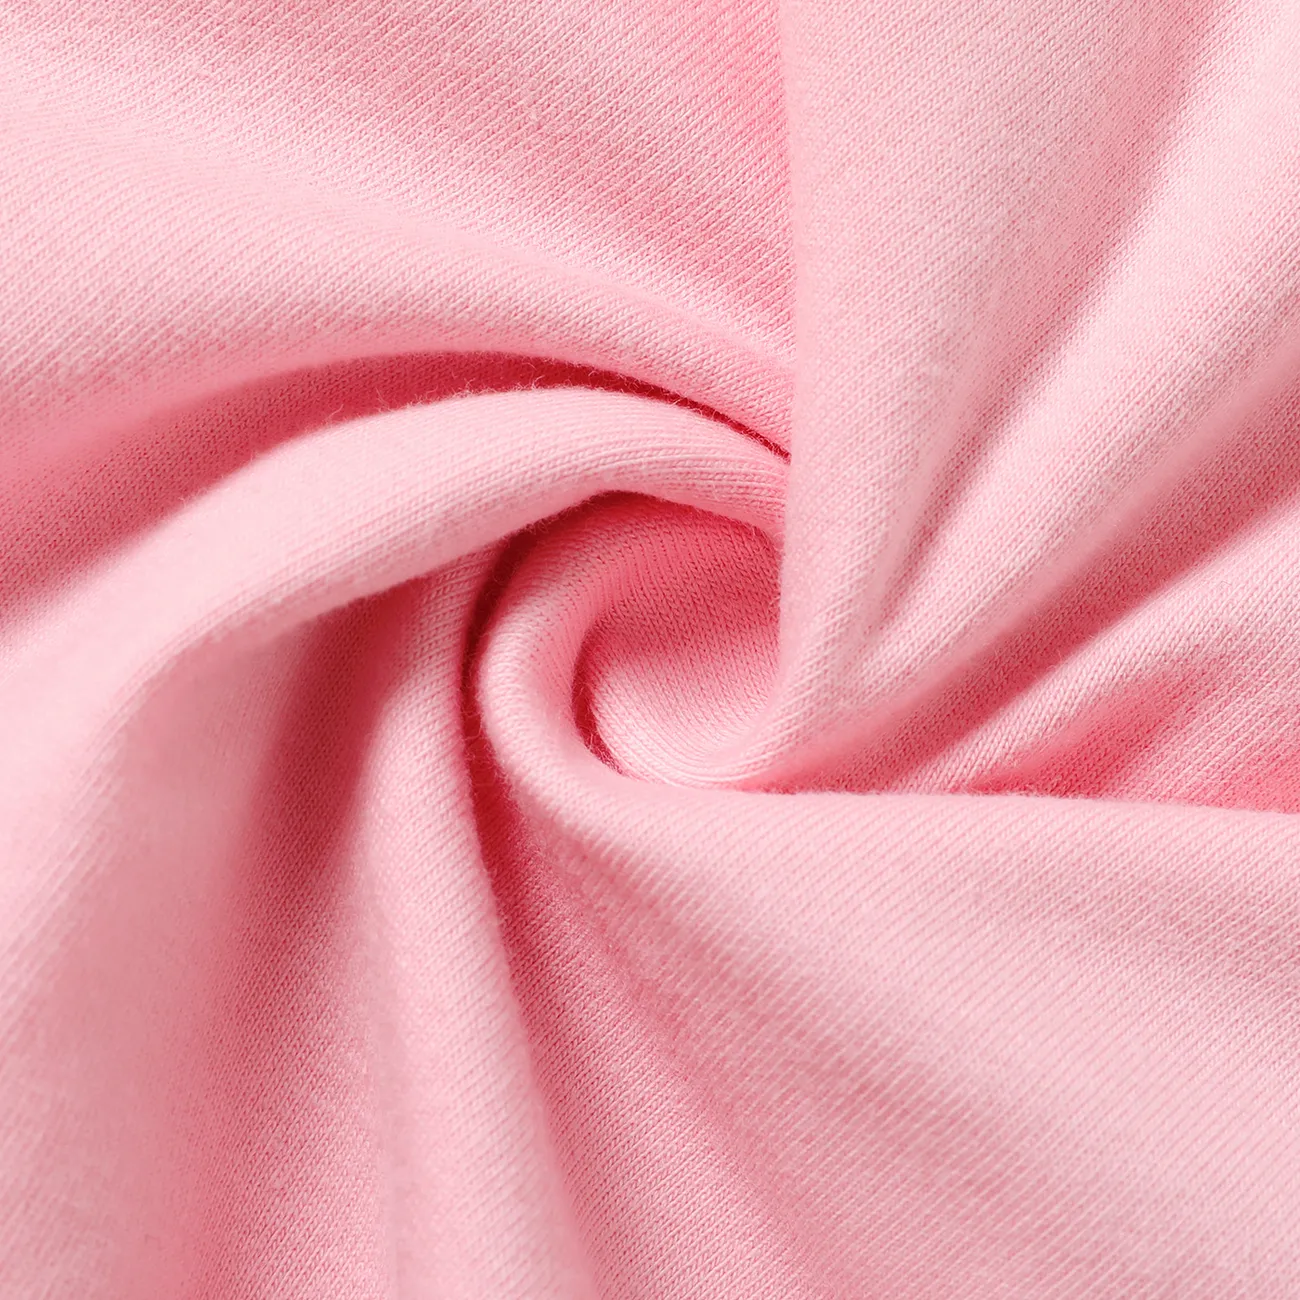 Kleinkinder Mädchen Tanktop Avantgardistisch Baby-Overalls rosa big image 1